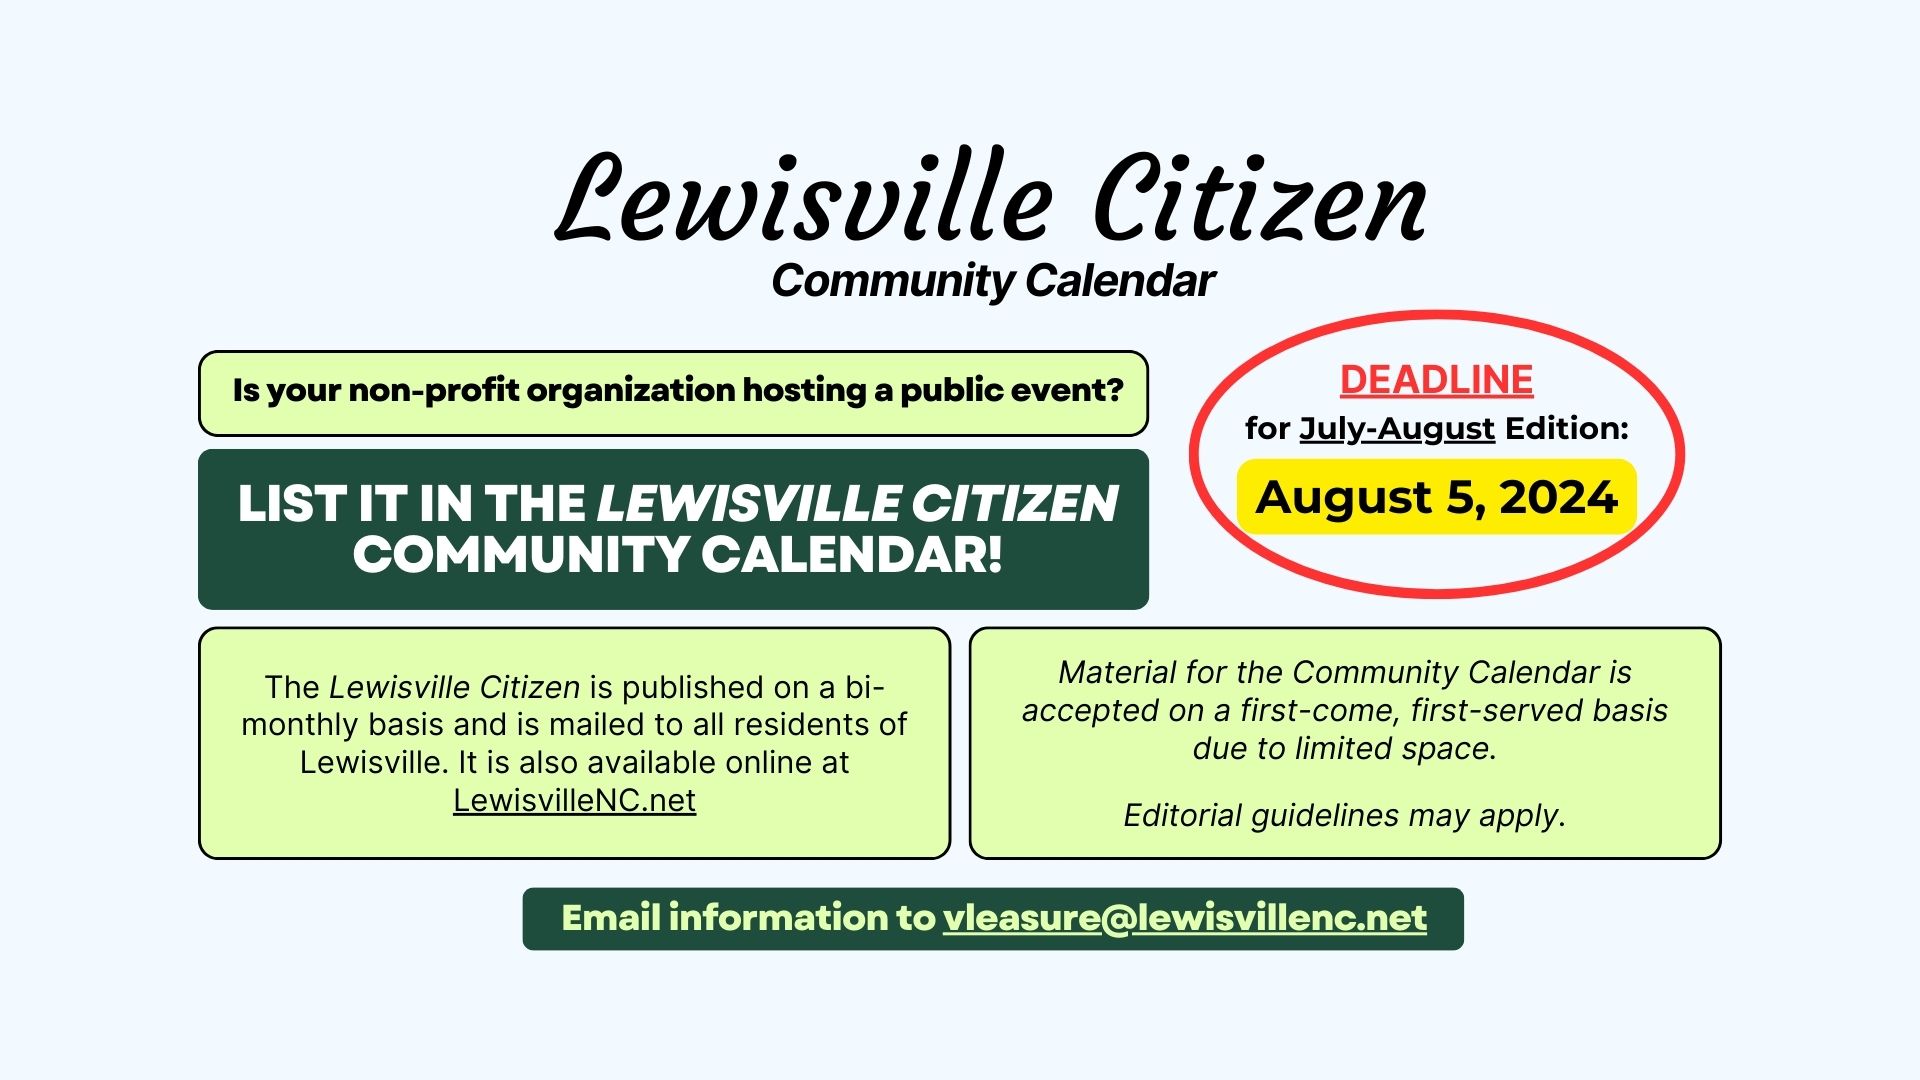 Lewisville Citizen Community Calendar deadline August 5, 2024